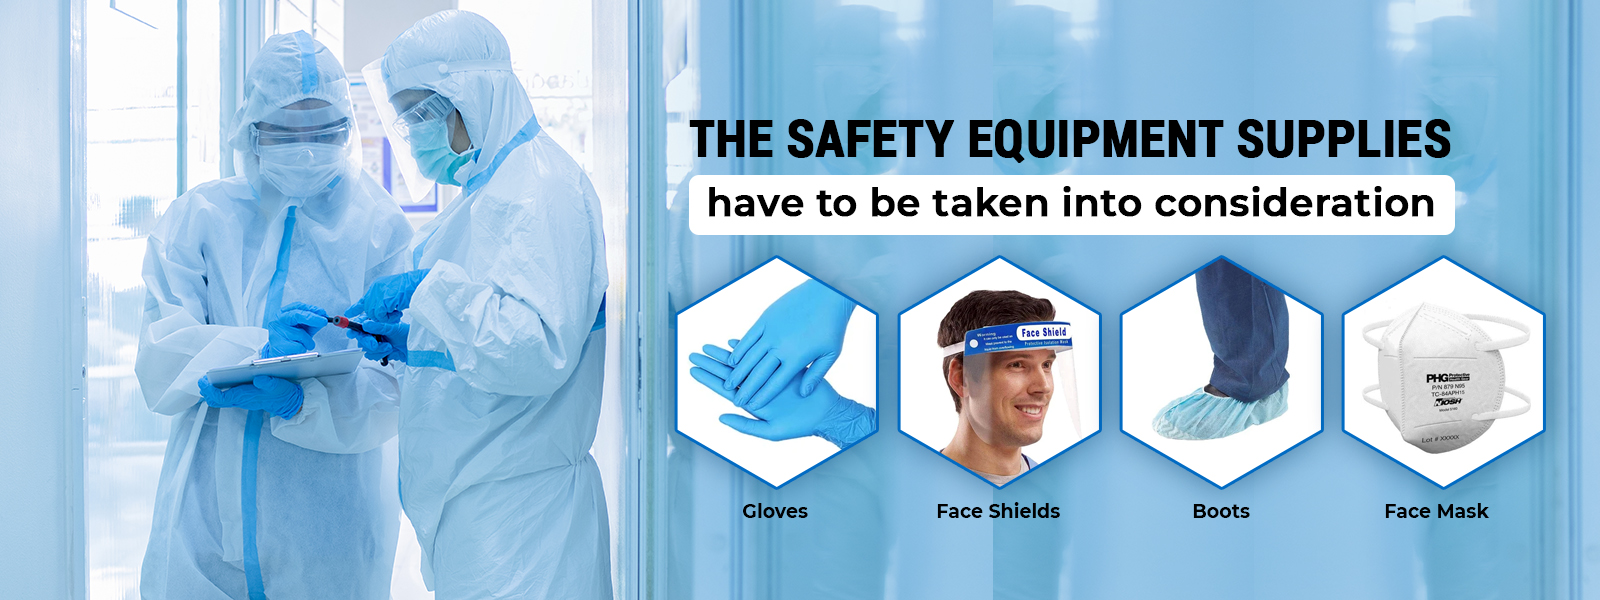 PPE Equipment Supplies